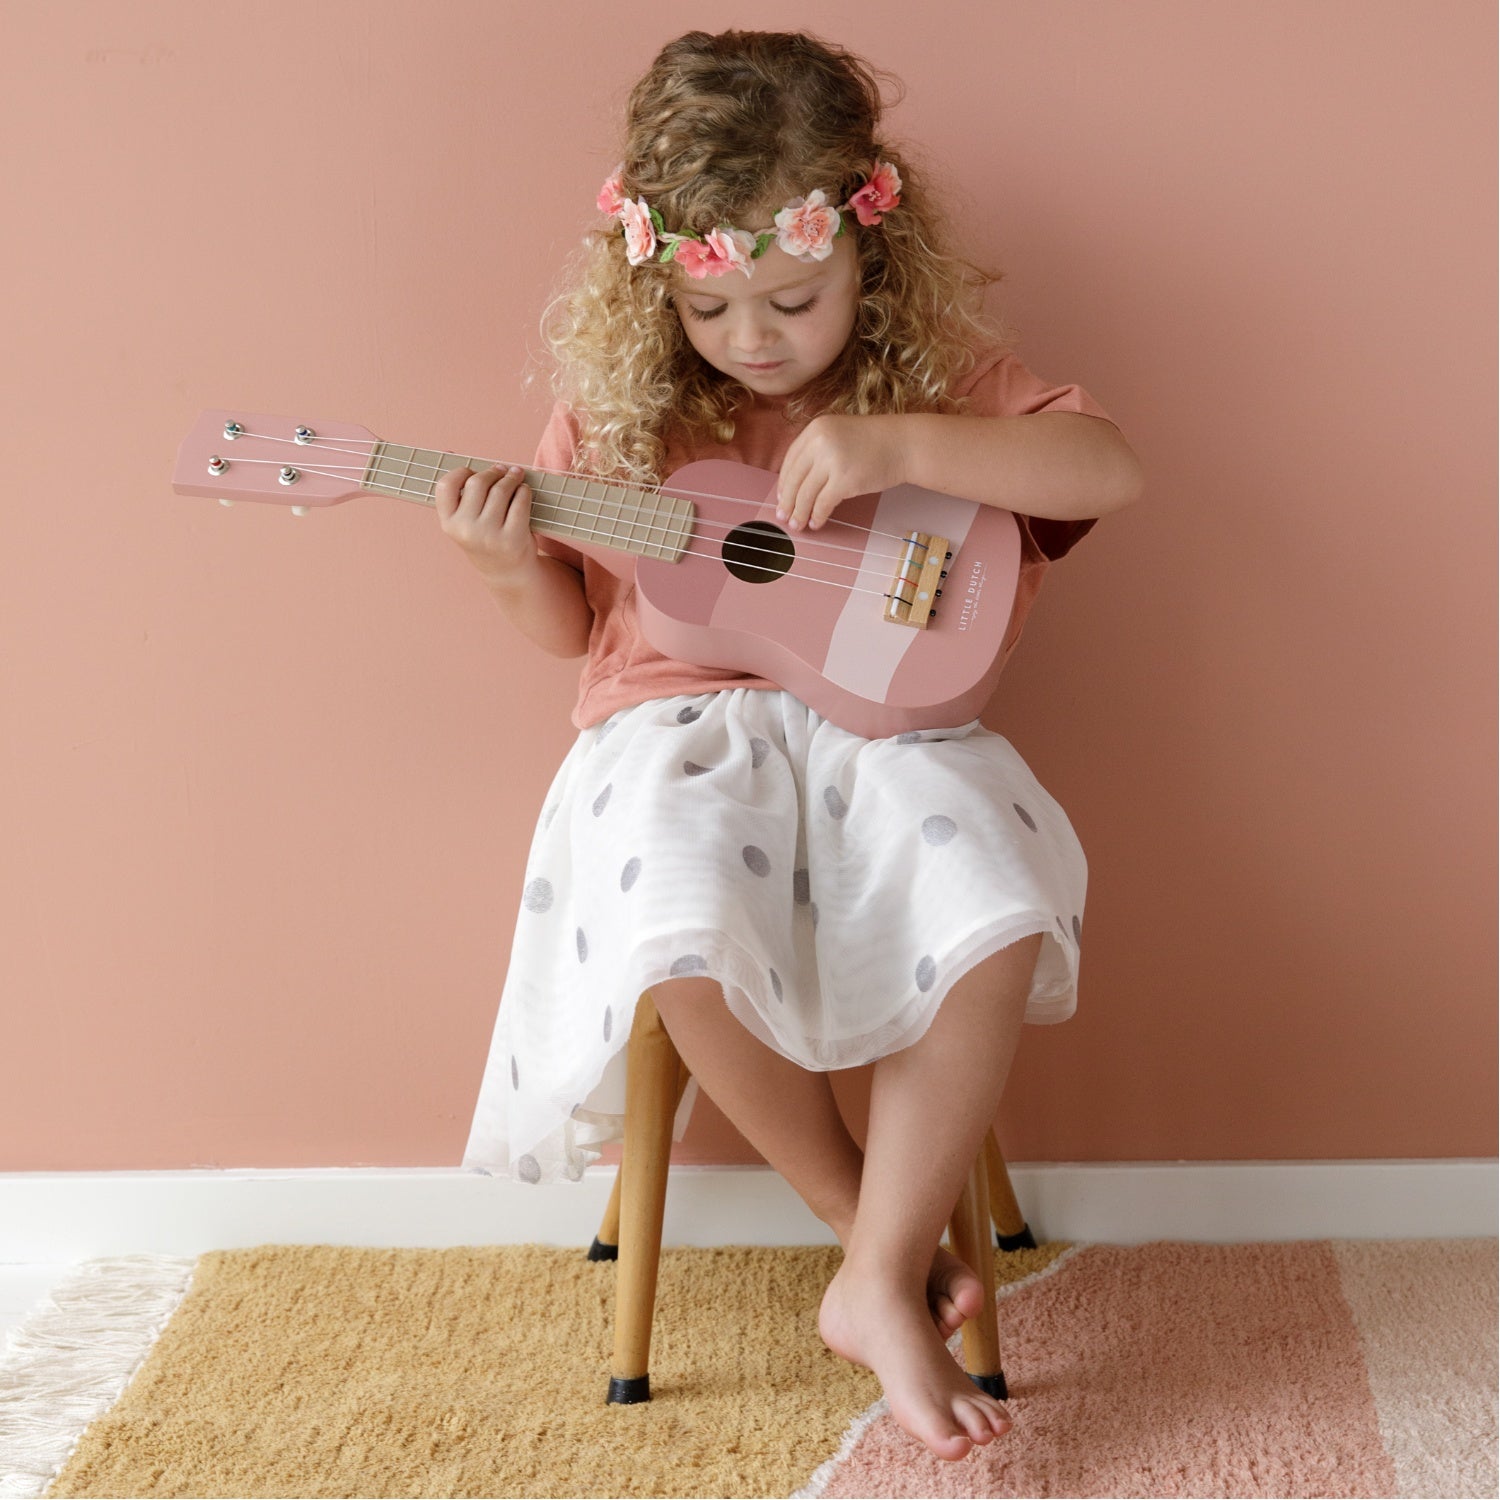 Little Dutch Guitar Pink | Toy Instrument for Kids | BeoVERDE Ireland